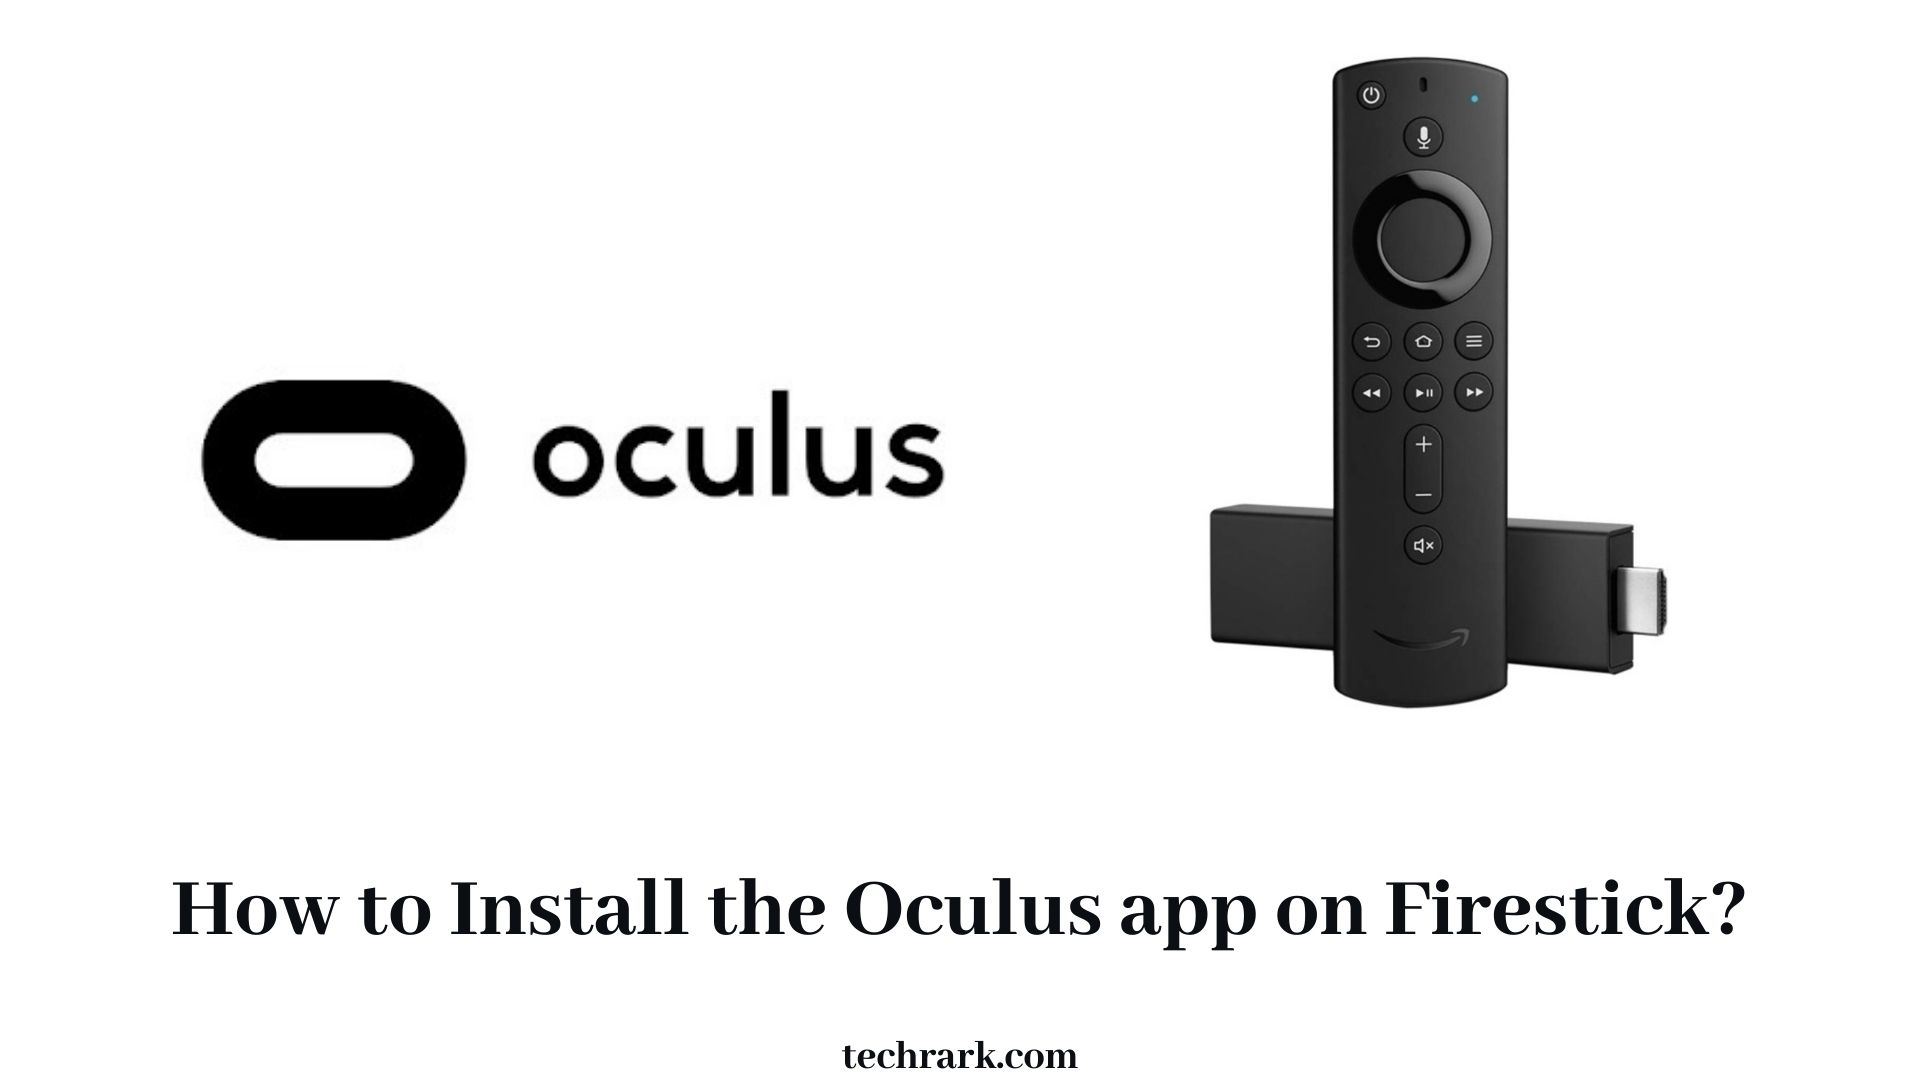 Oculus app on Firestick